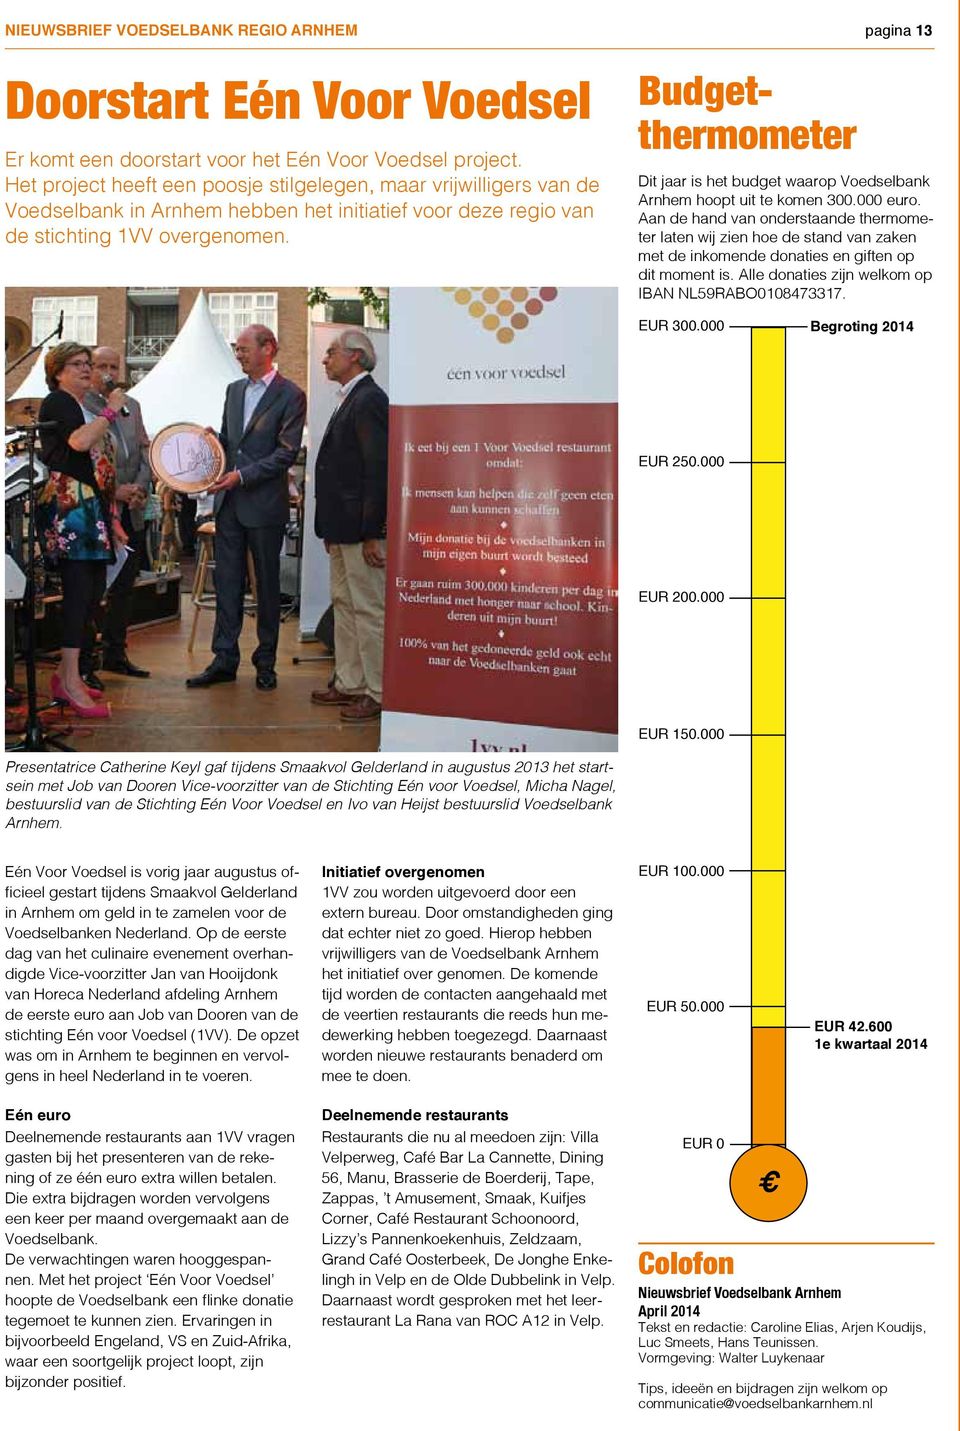 Budgetthermometer Dit jaar is het budget waarop Voedselbank Arnhem hoopt uit te komen 300.000 euro.